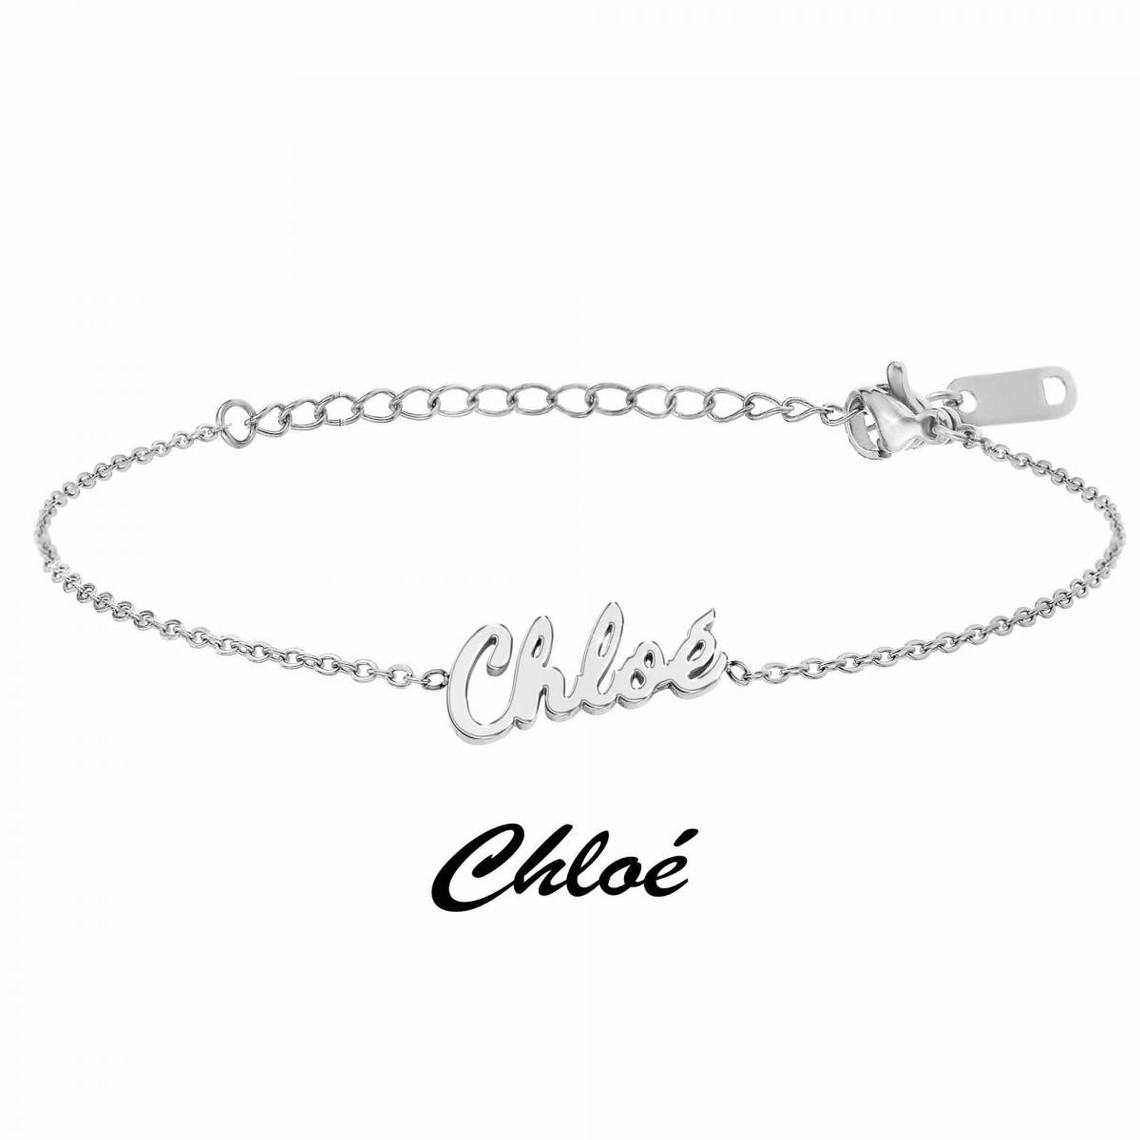 bracelet athème b2694-argent-chloe femme